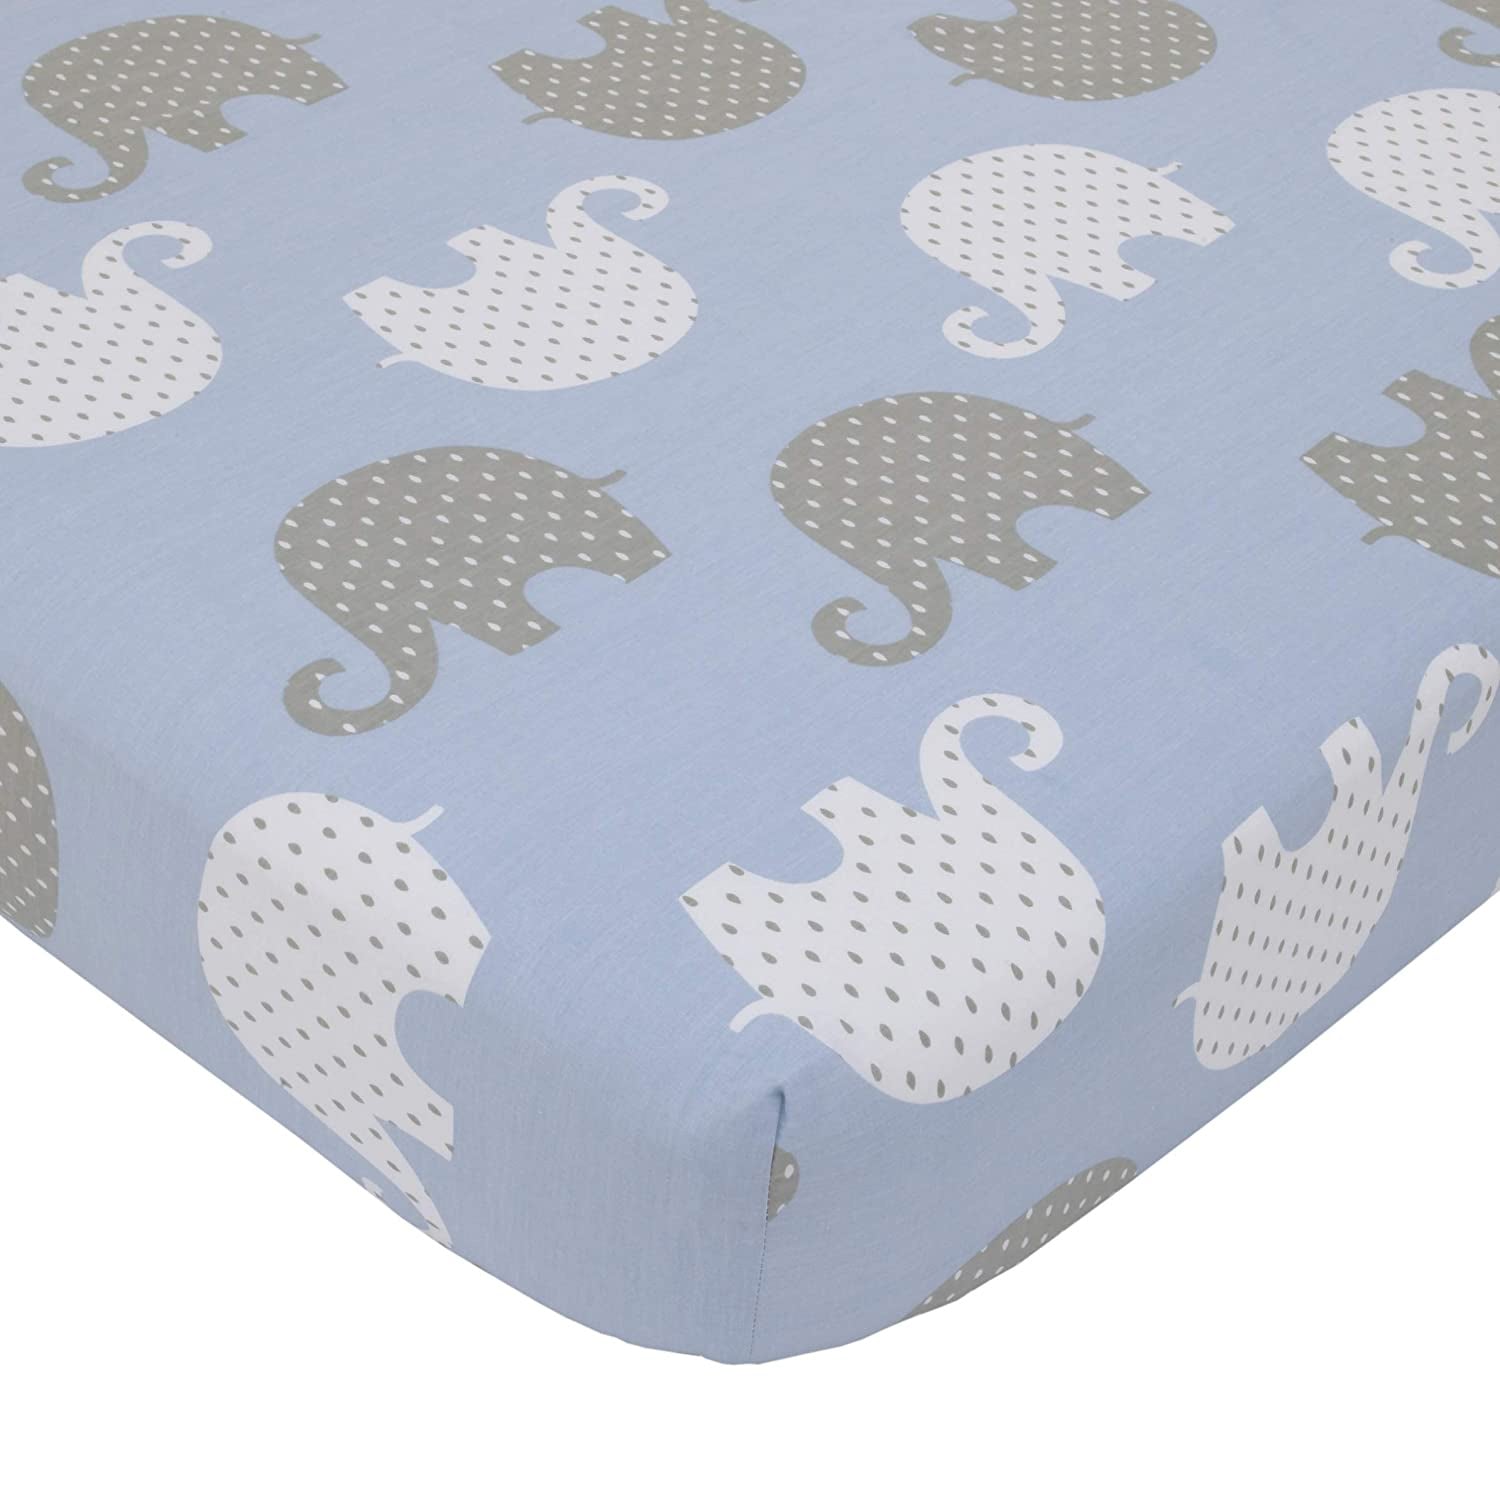 NoJo Elephant 4 Piece Nursery Crib Bedding Set, Blue/Grey/White